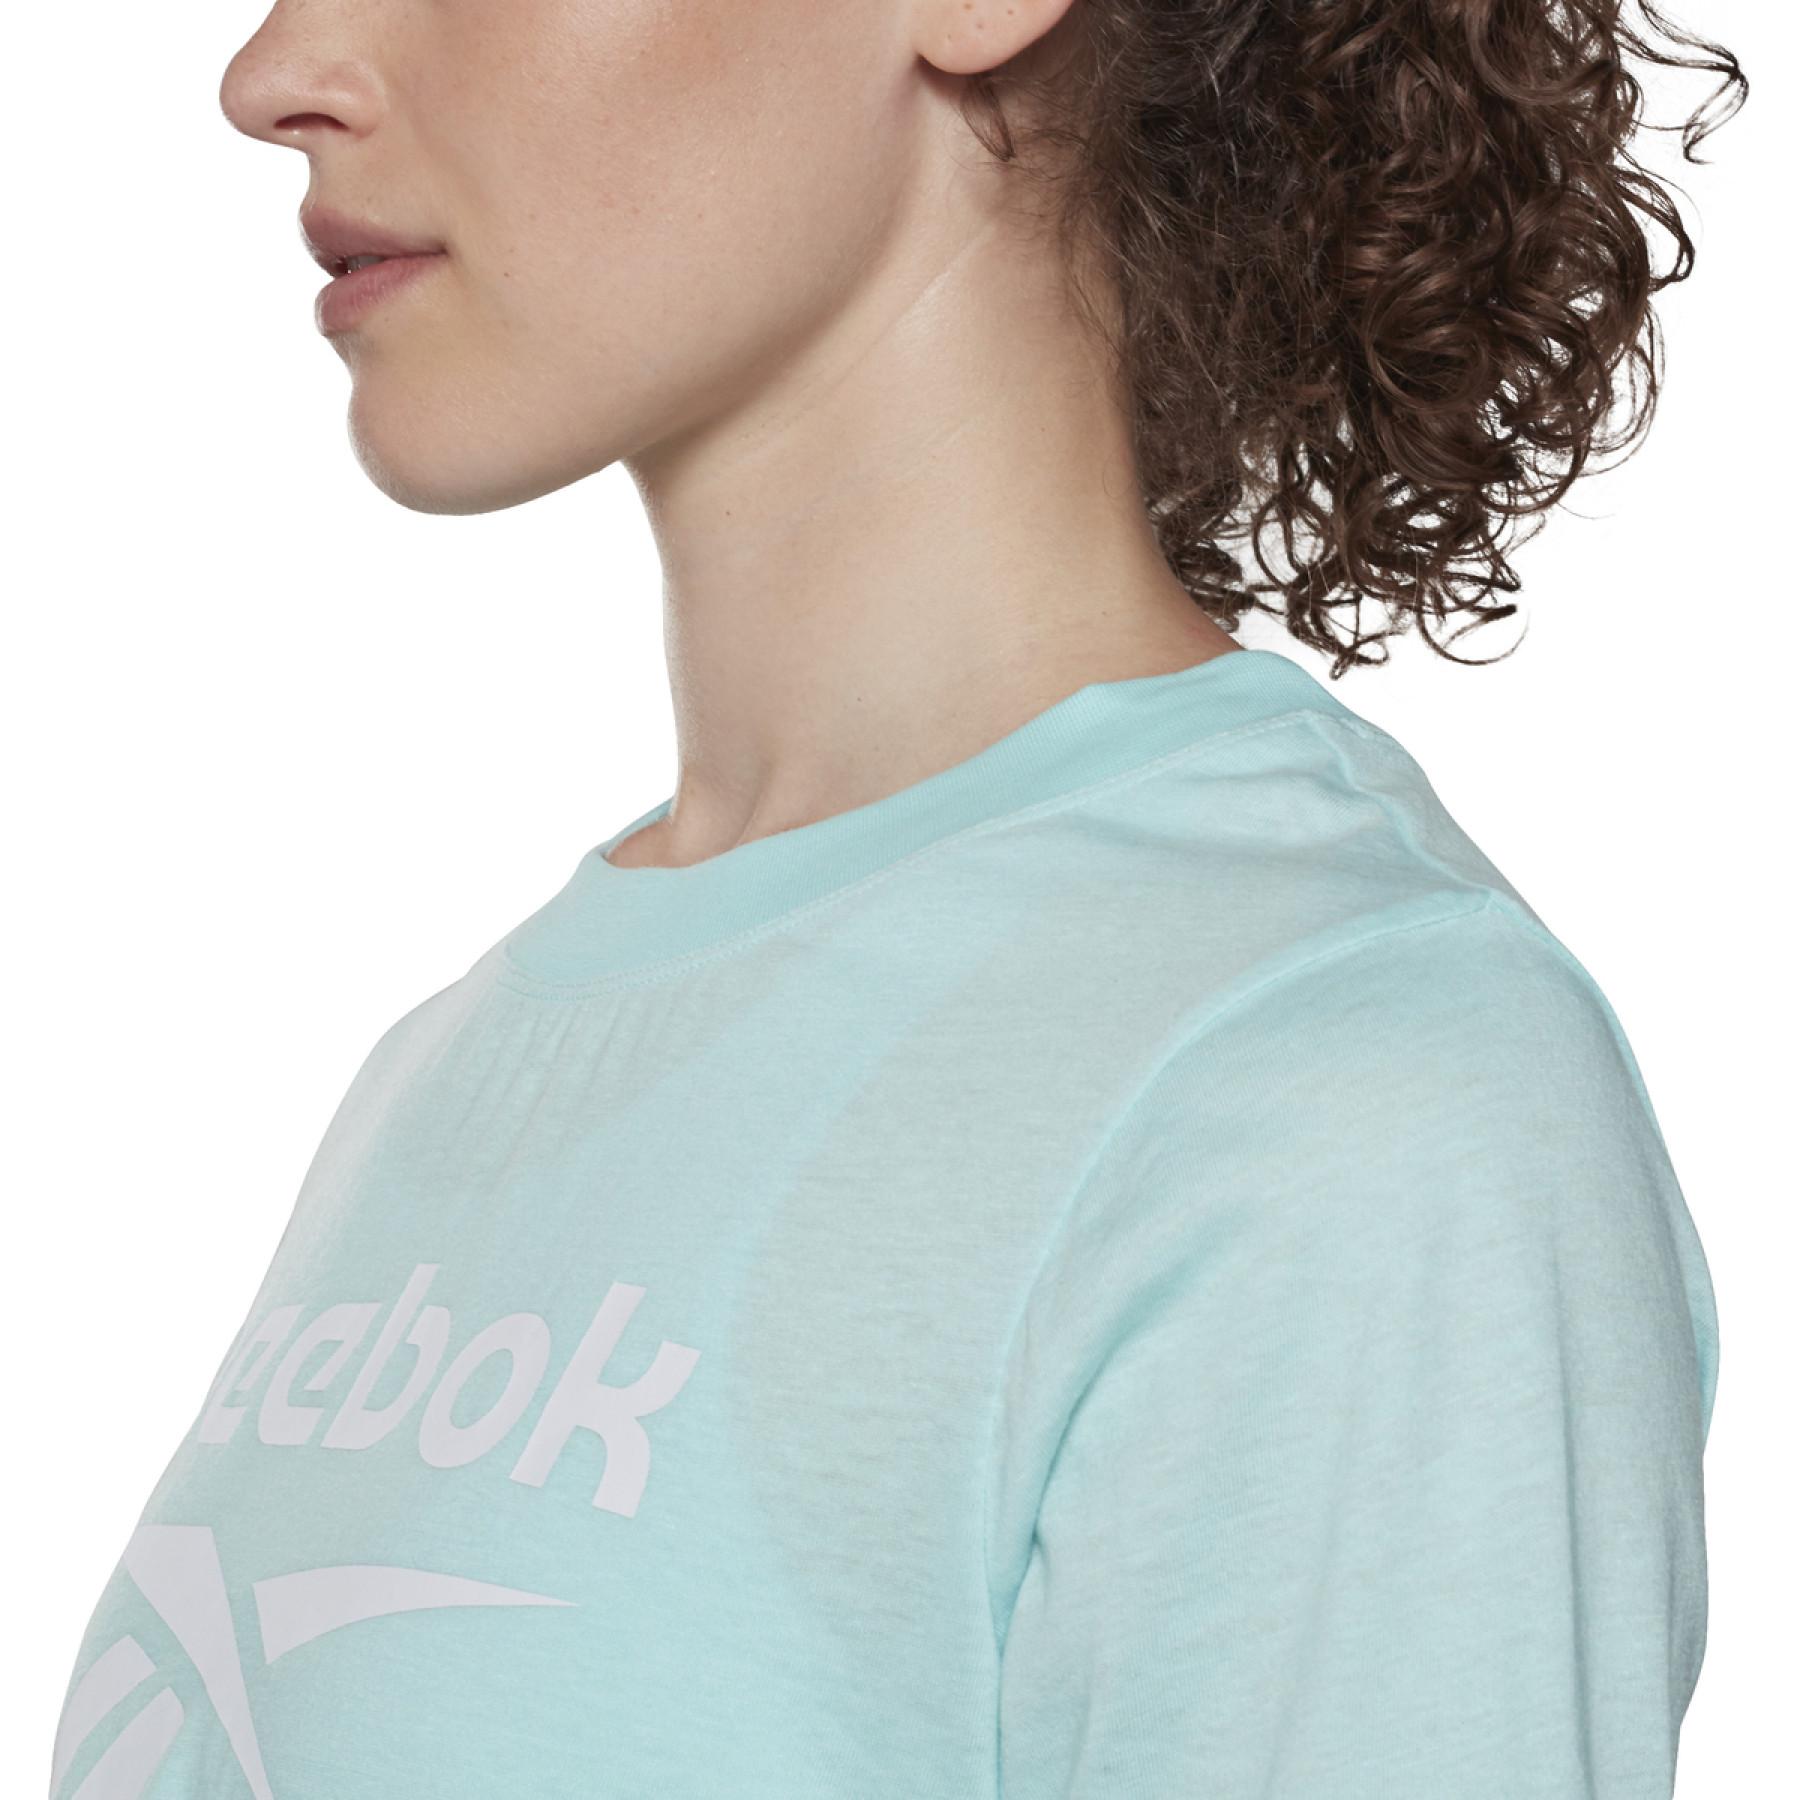 Frauen-T-Shirt Reebok Identity Cropped